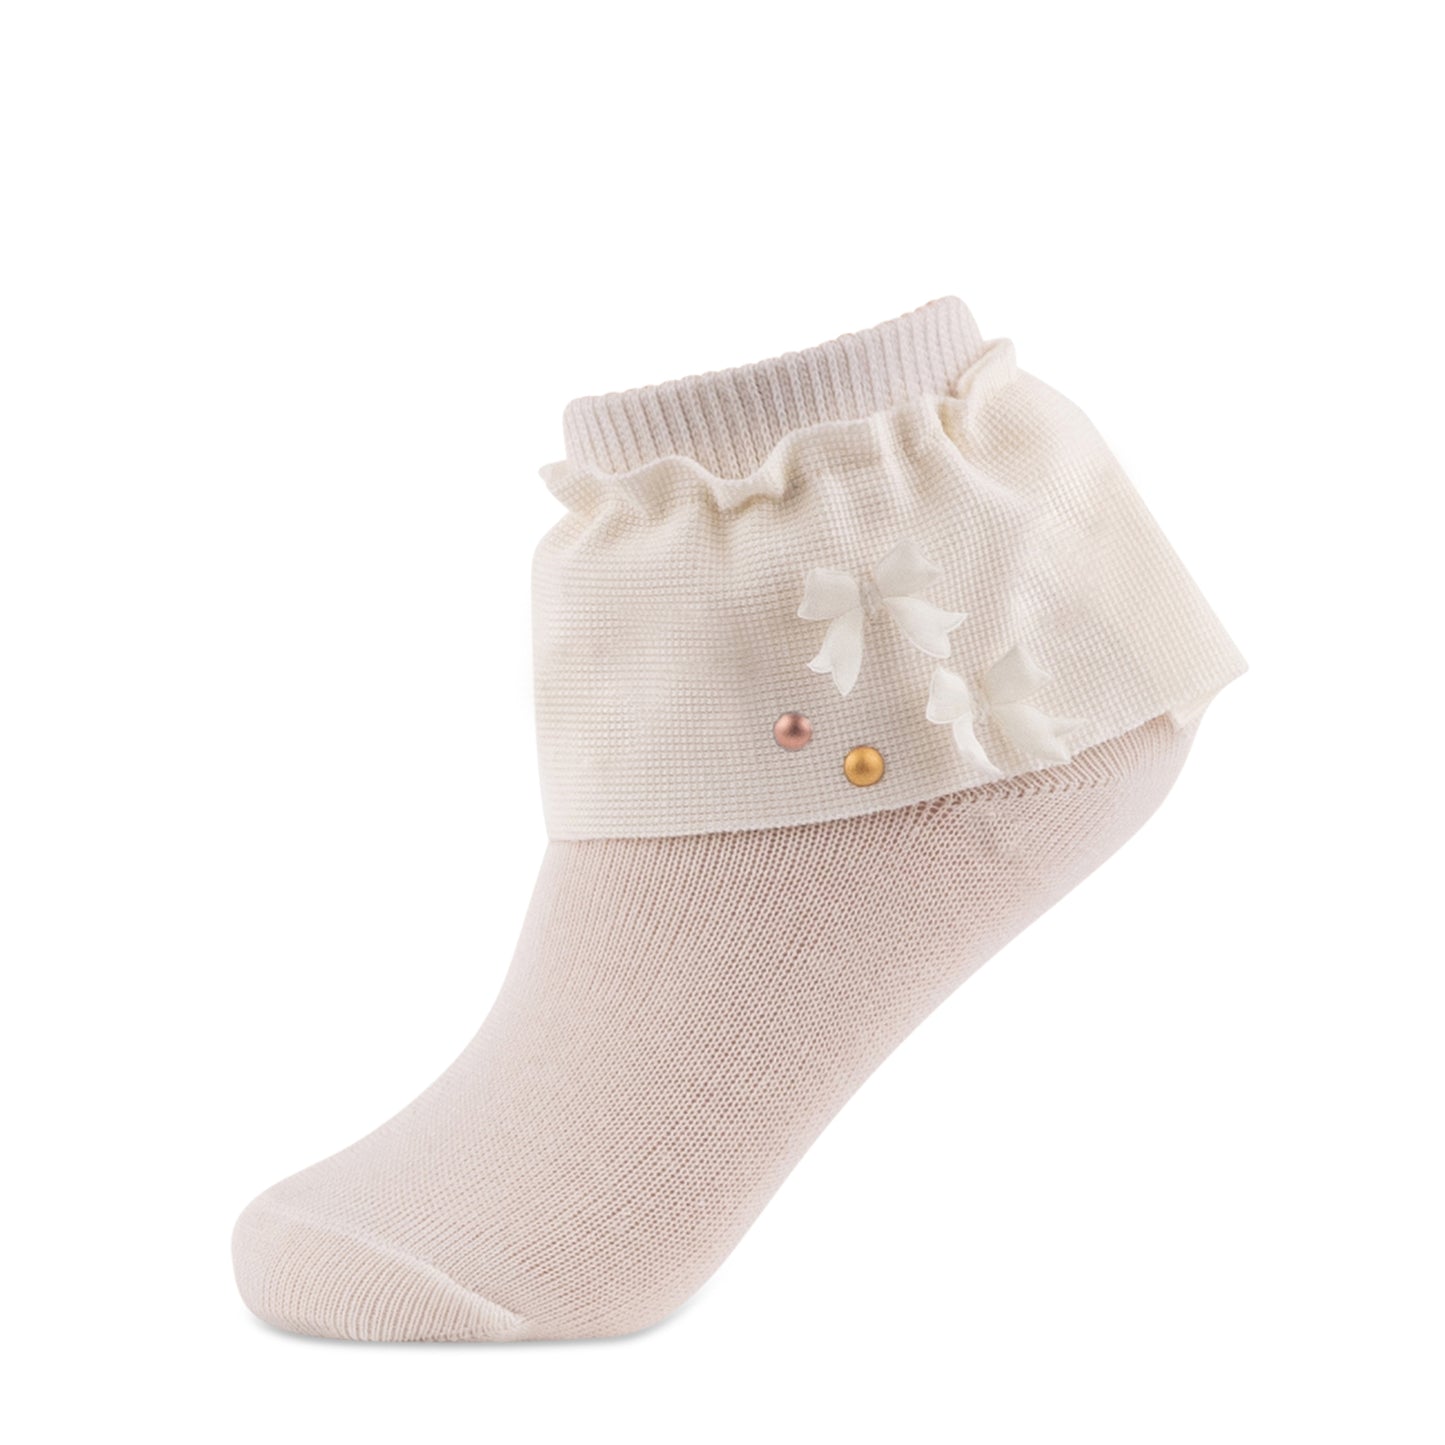 jrp socks cream dreamy lace anklet ruffle sock